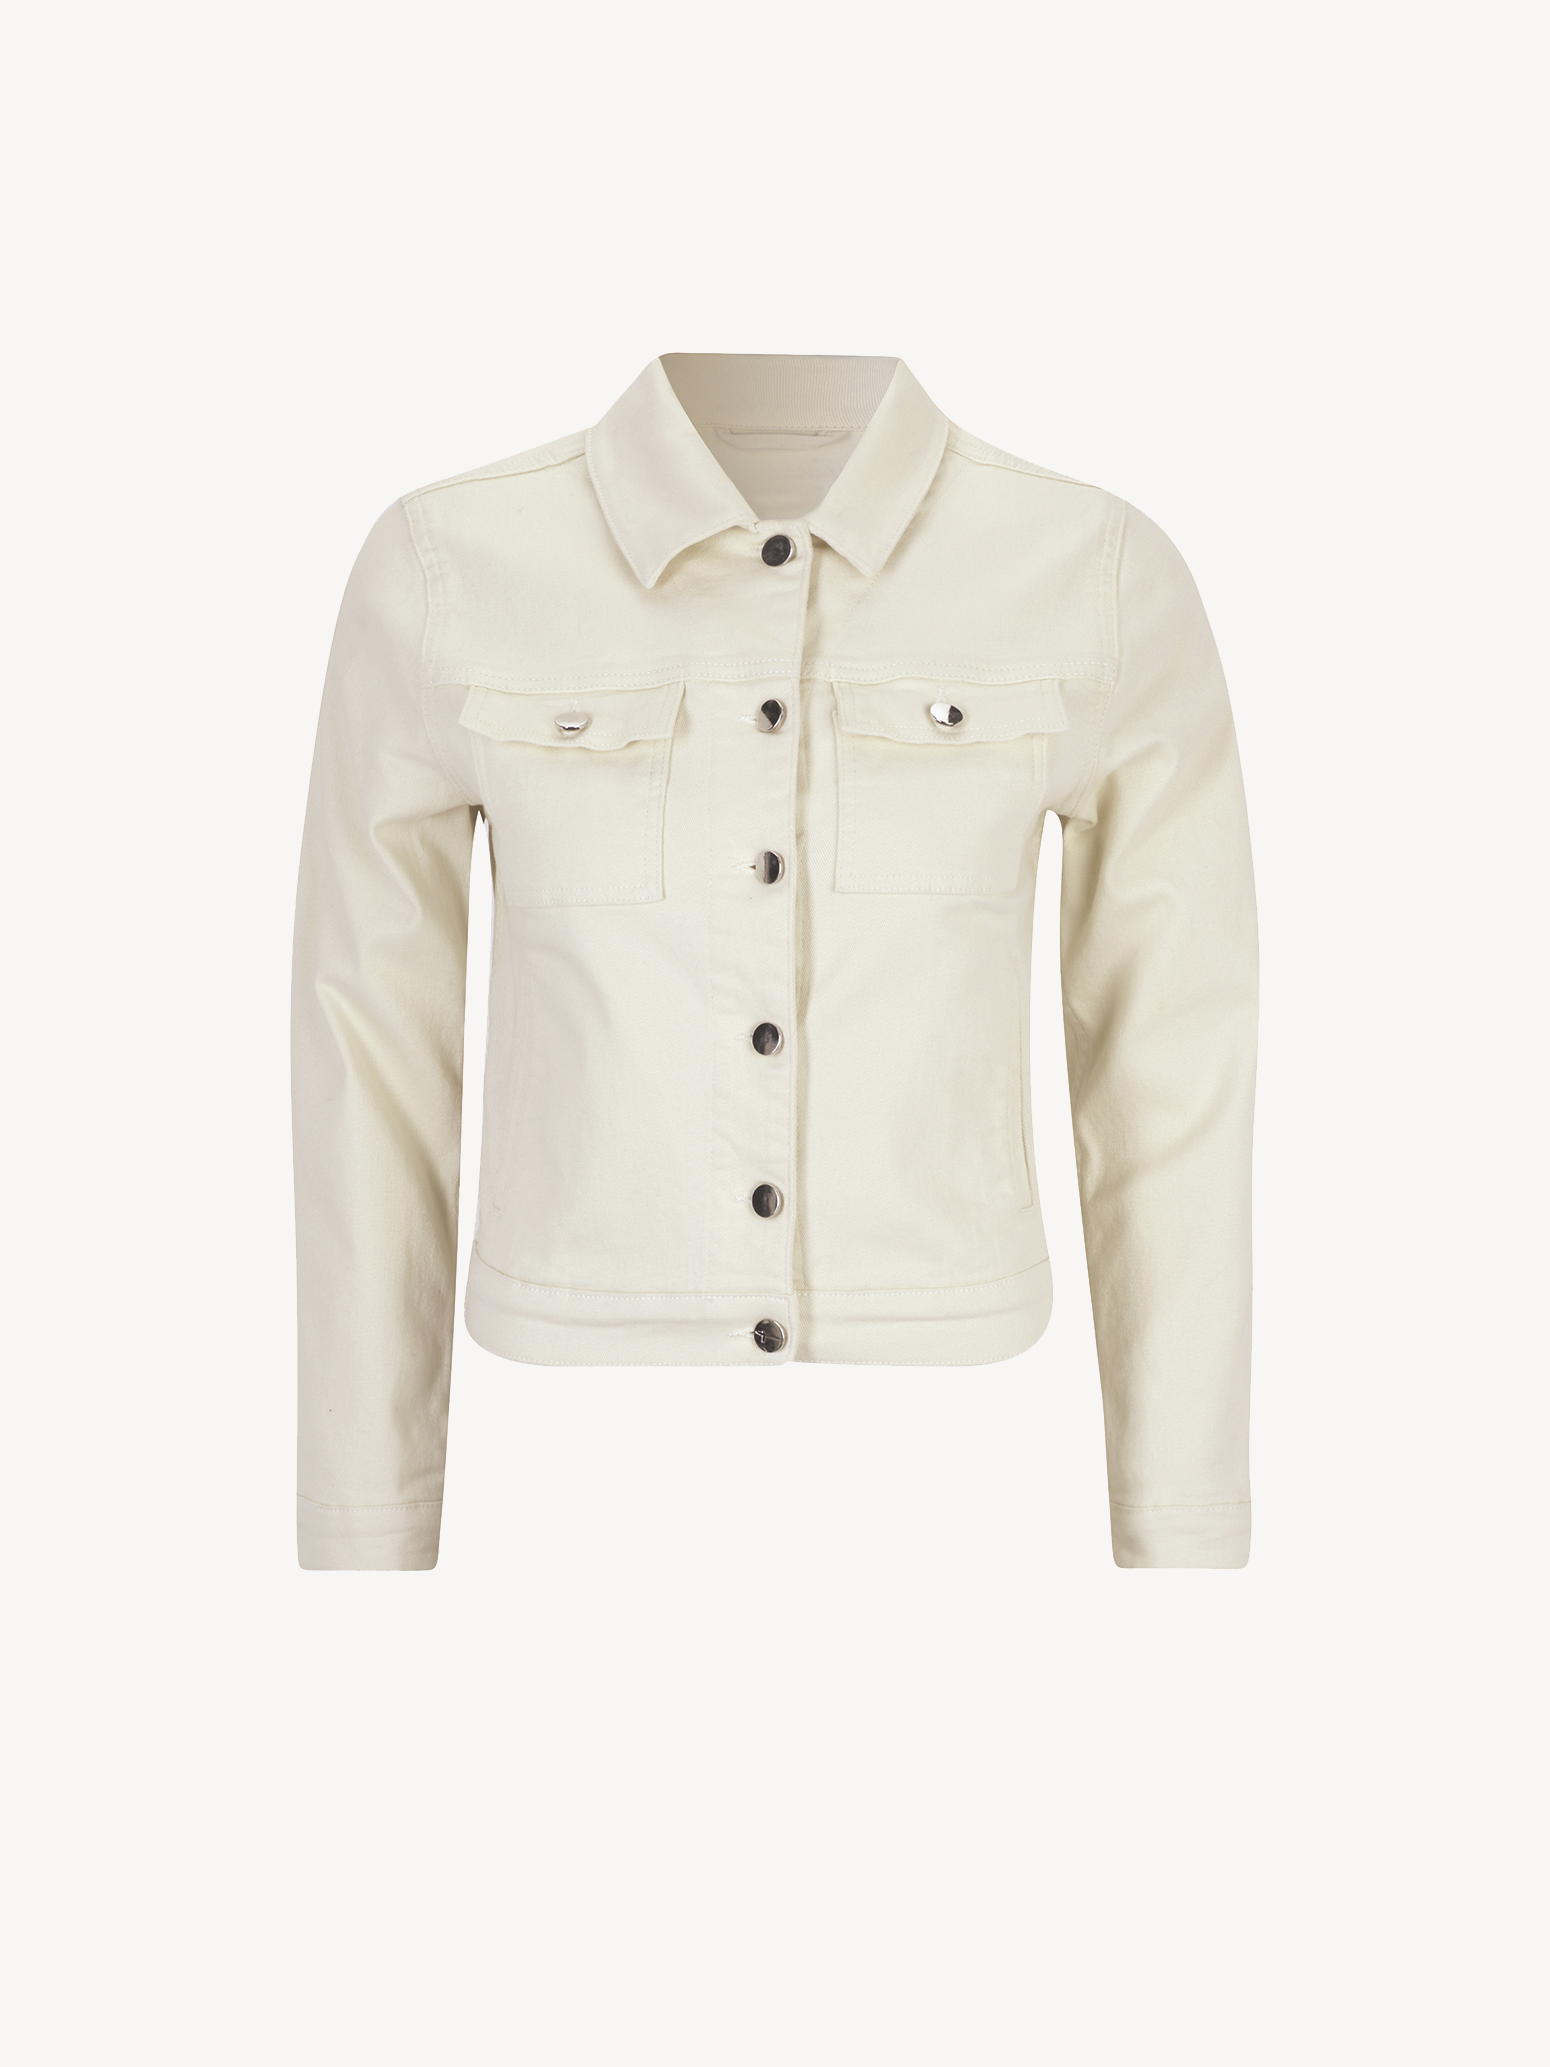 Jeansjacke - & Mäntel online kaufen! Jacken beige TAW0168-70024: Tamaris